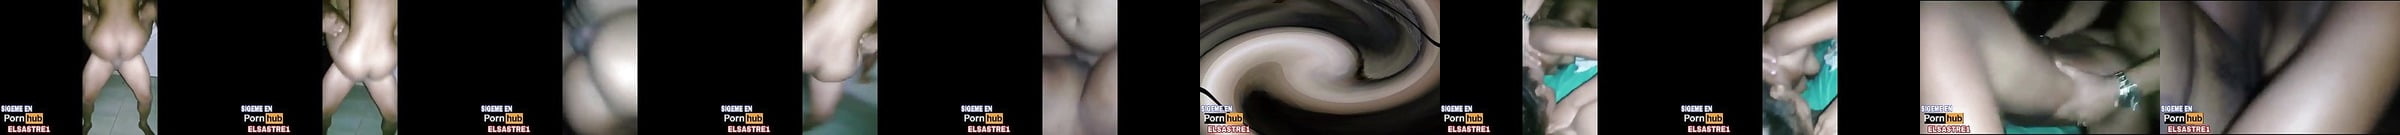 Featured Skandal Gisella Anastasia Viral Video Sex Porn